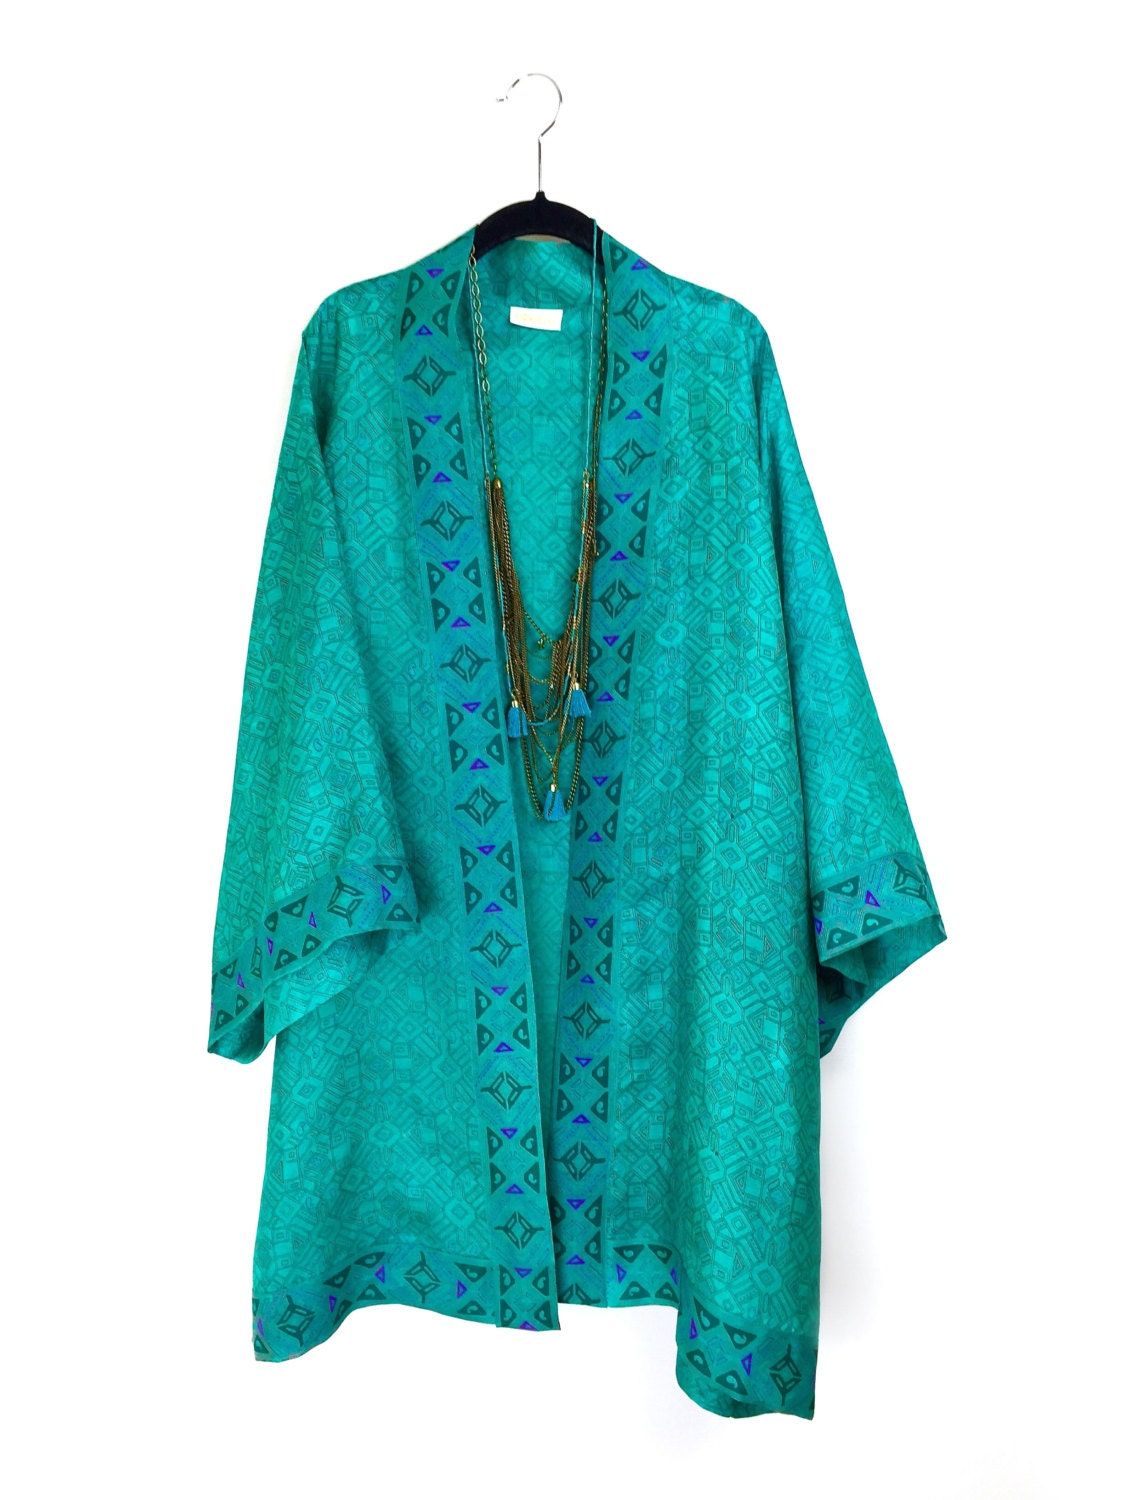 Silk Kimono jacket oversized style in jade green with an